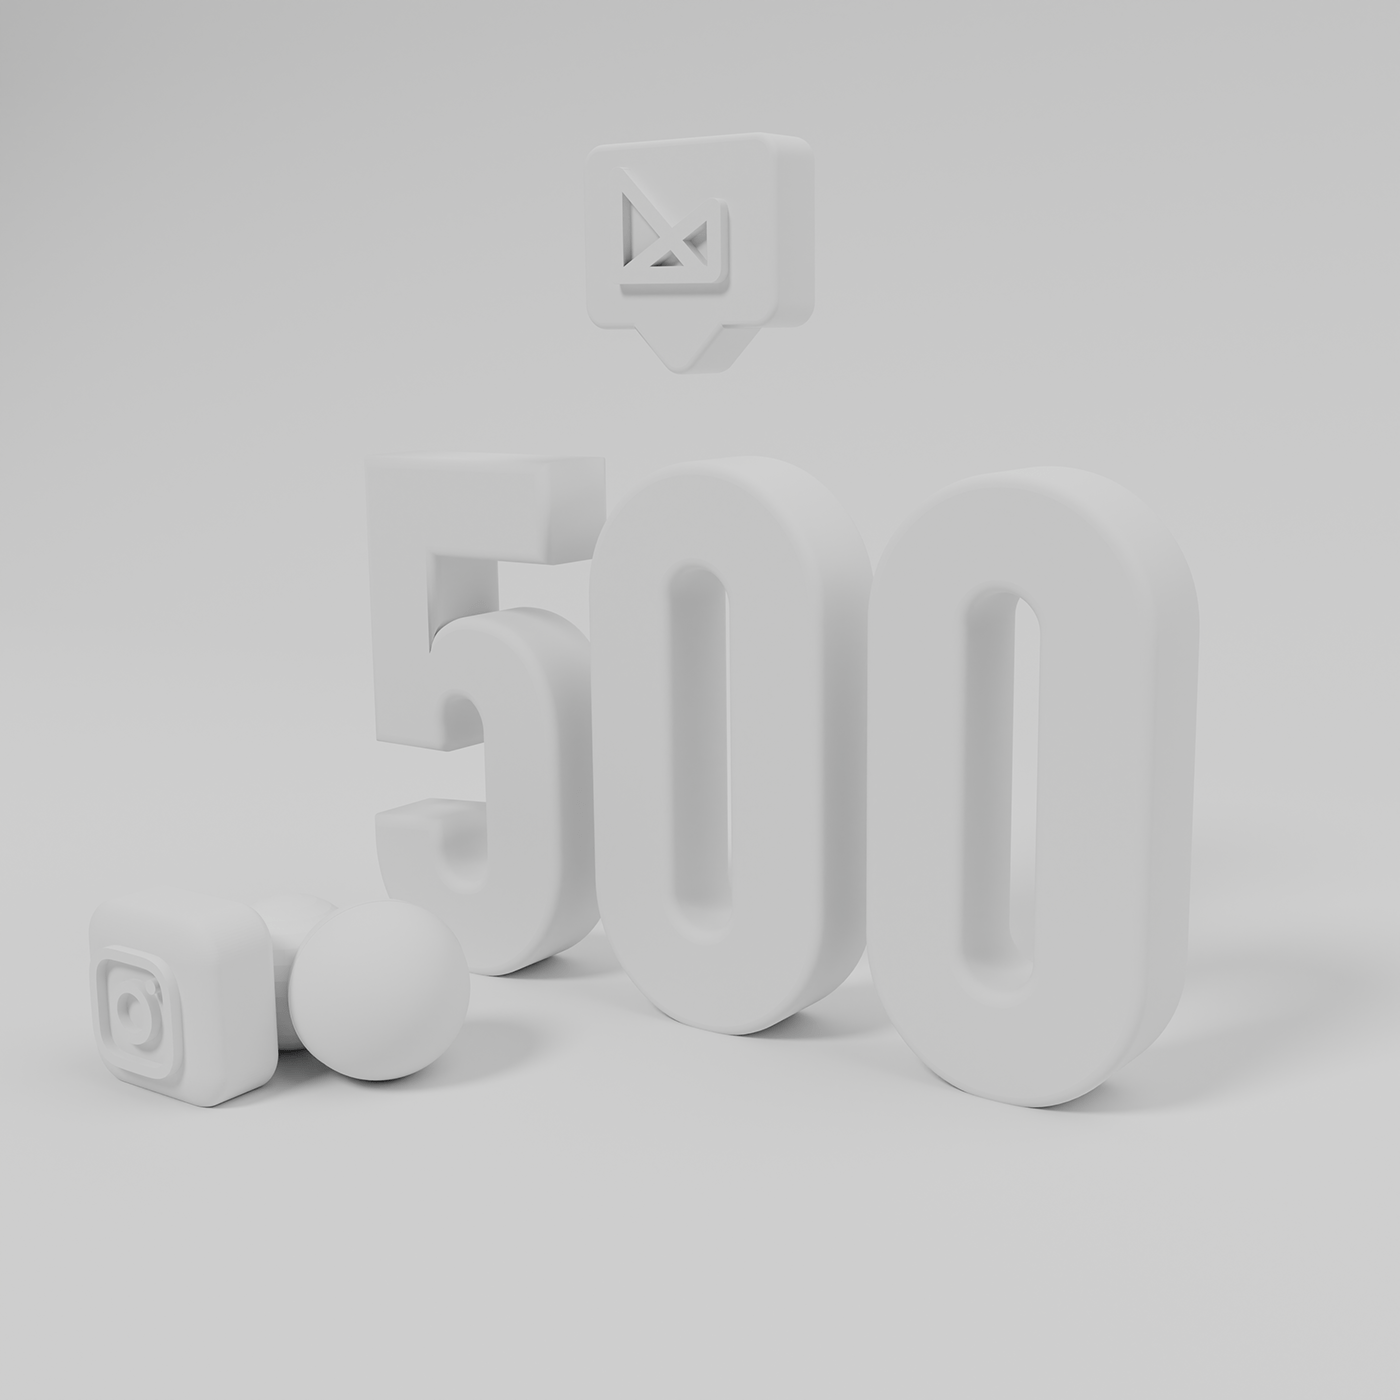 3D 3d art 3D Blender 500 followers cinema 4d followers insgram post instargram MEGA MALIK milestone